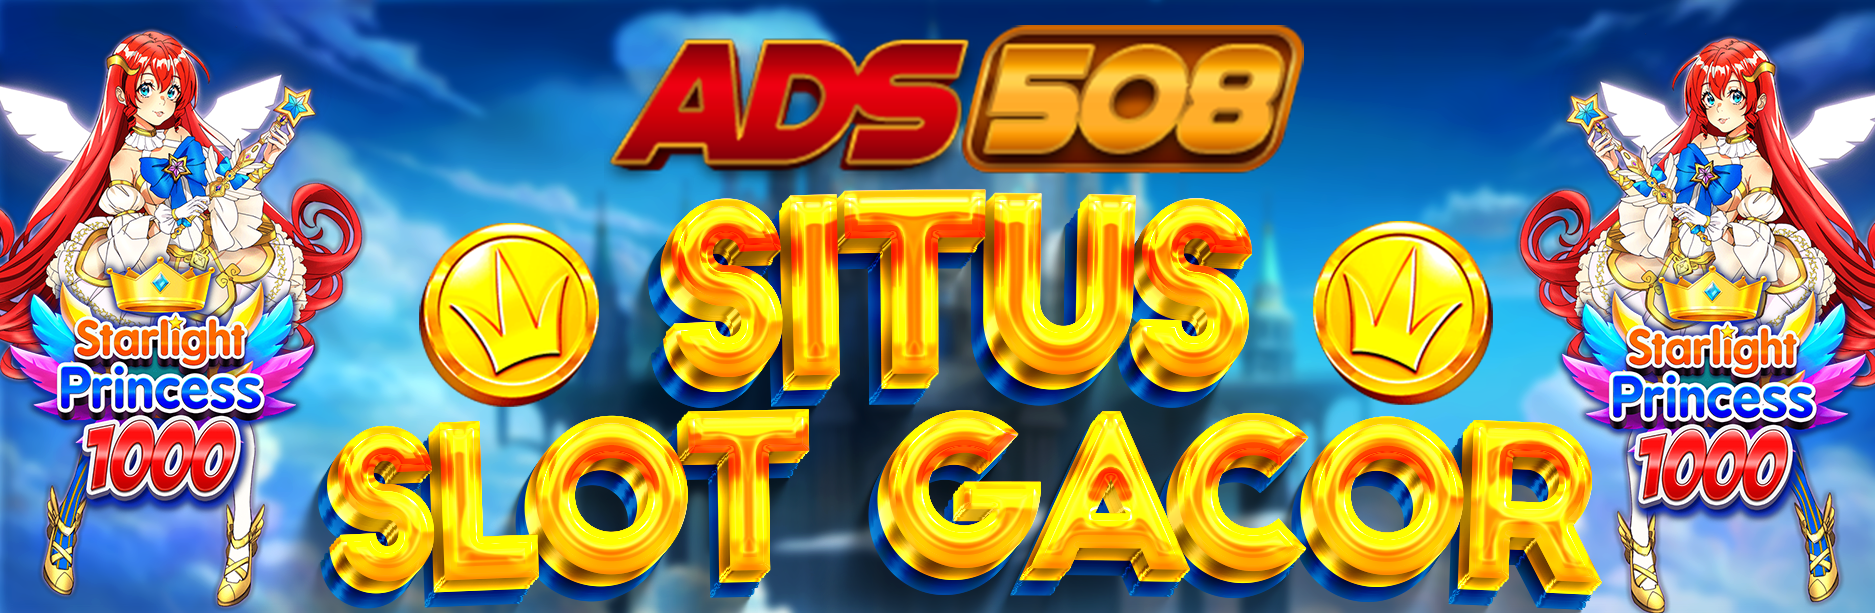 ads508 situs slot gacor